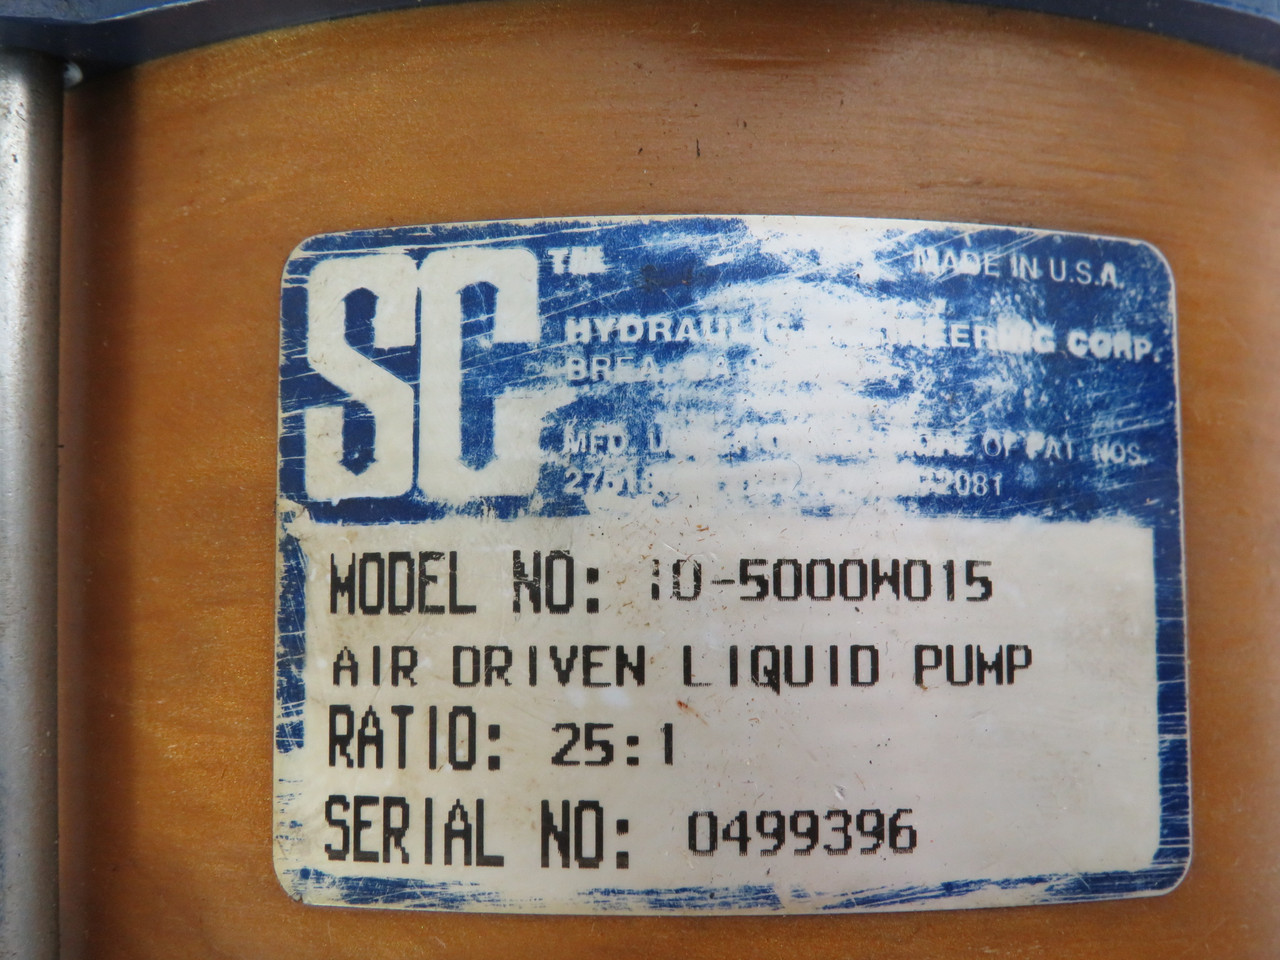 SC Hydraulic 10-5000W015 10-5 Series Air Driven Liquid Pump 25:1 Ratio USED